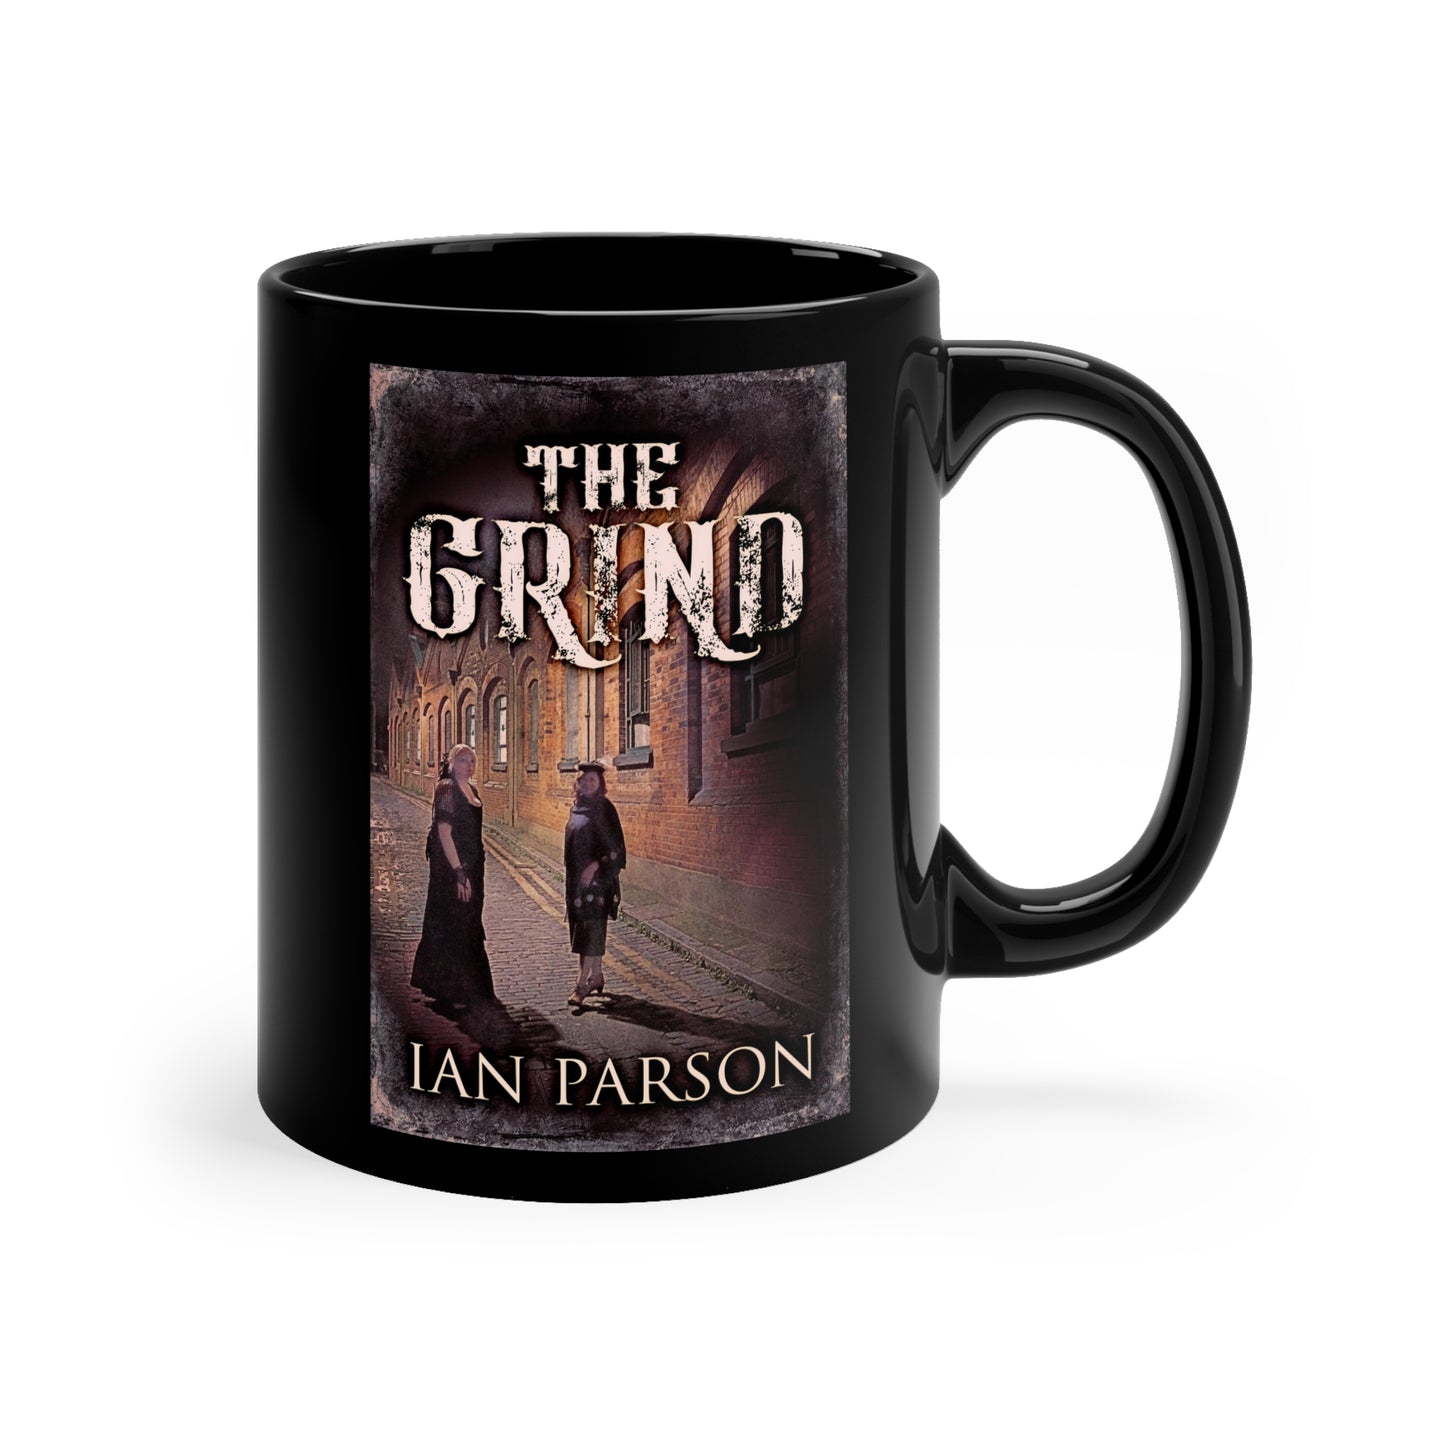 The Grind - Black Coffee Mug